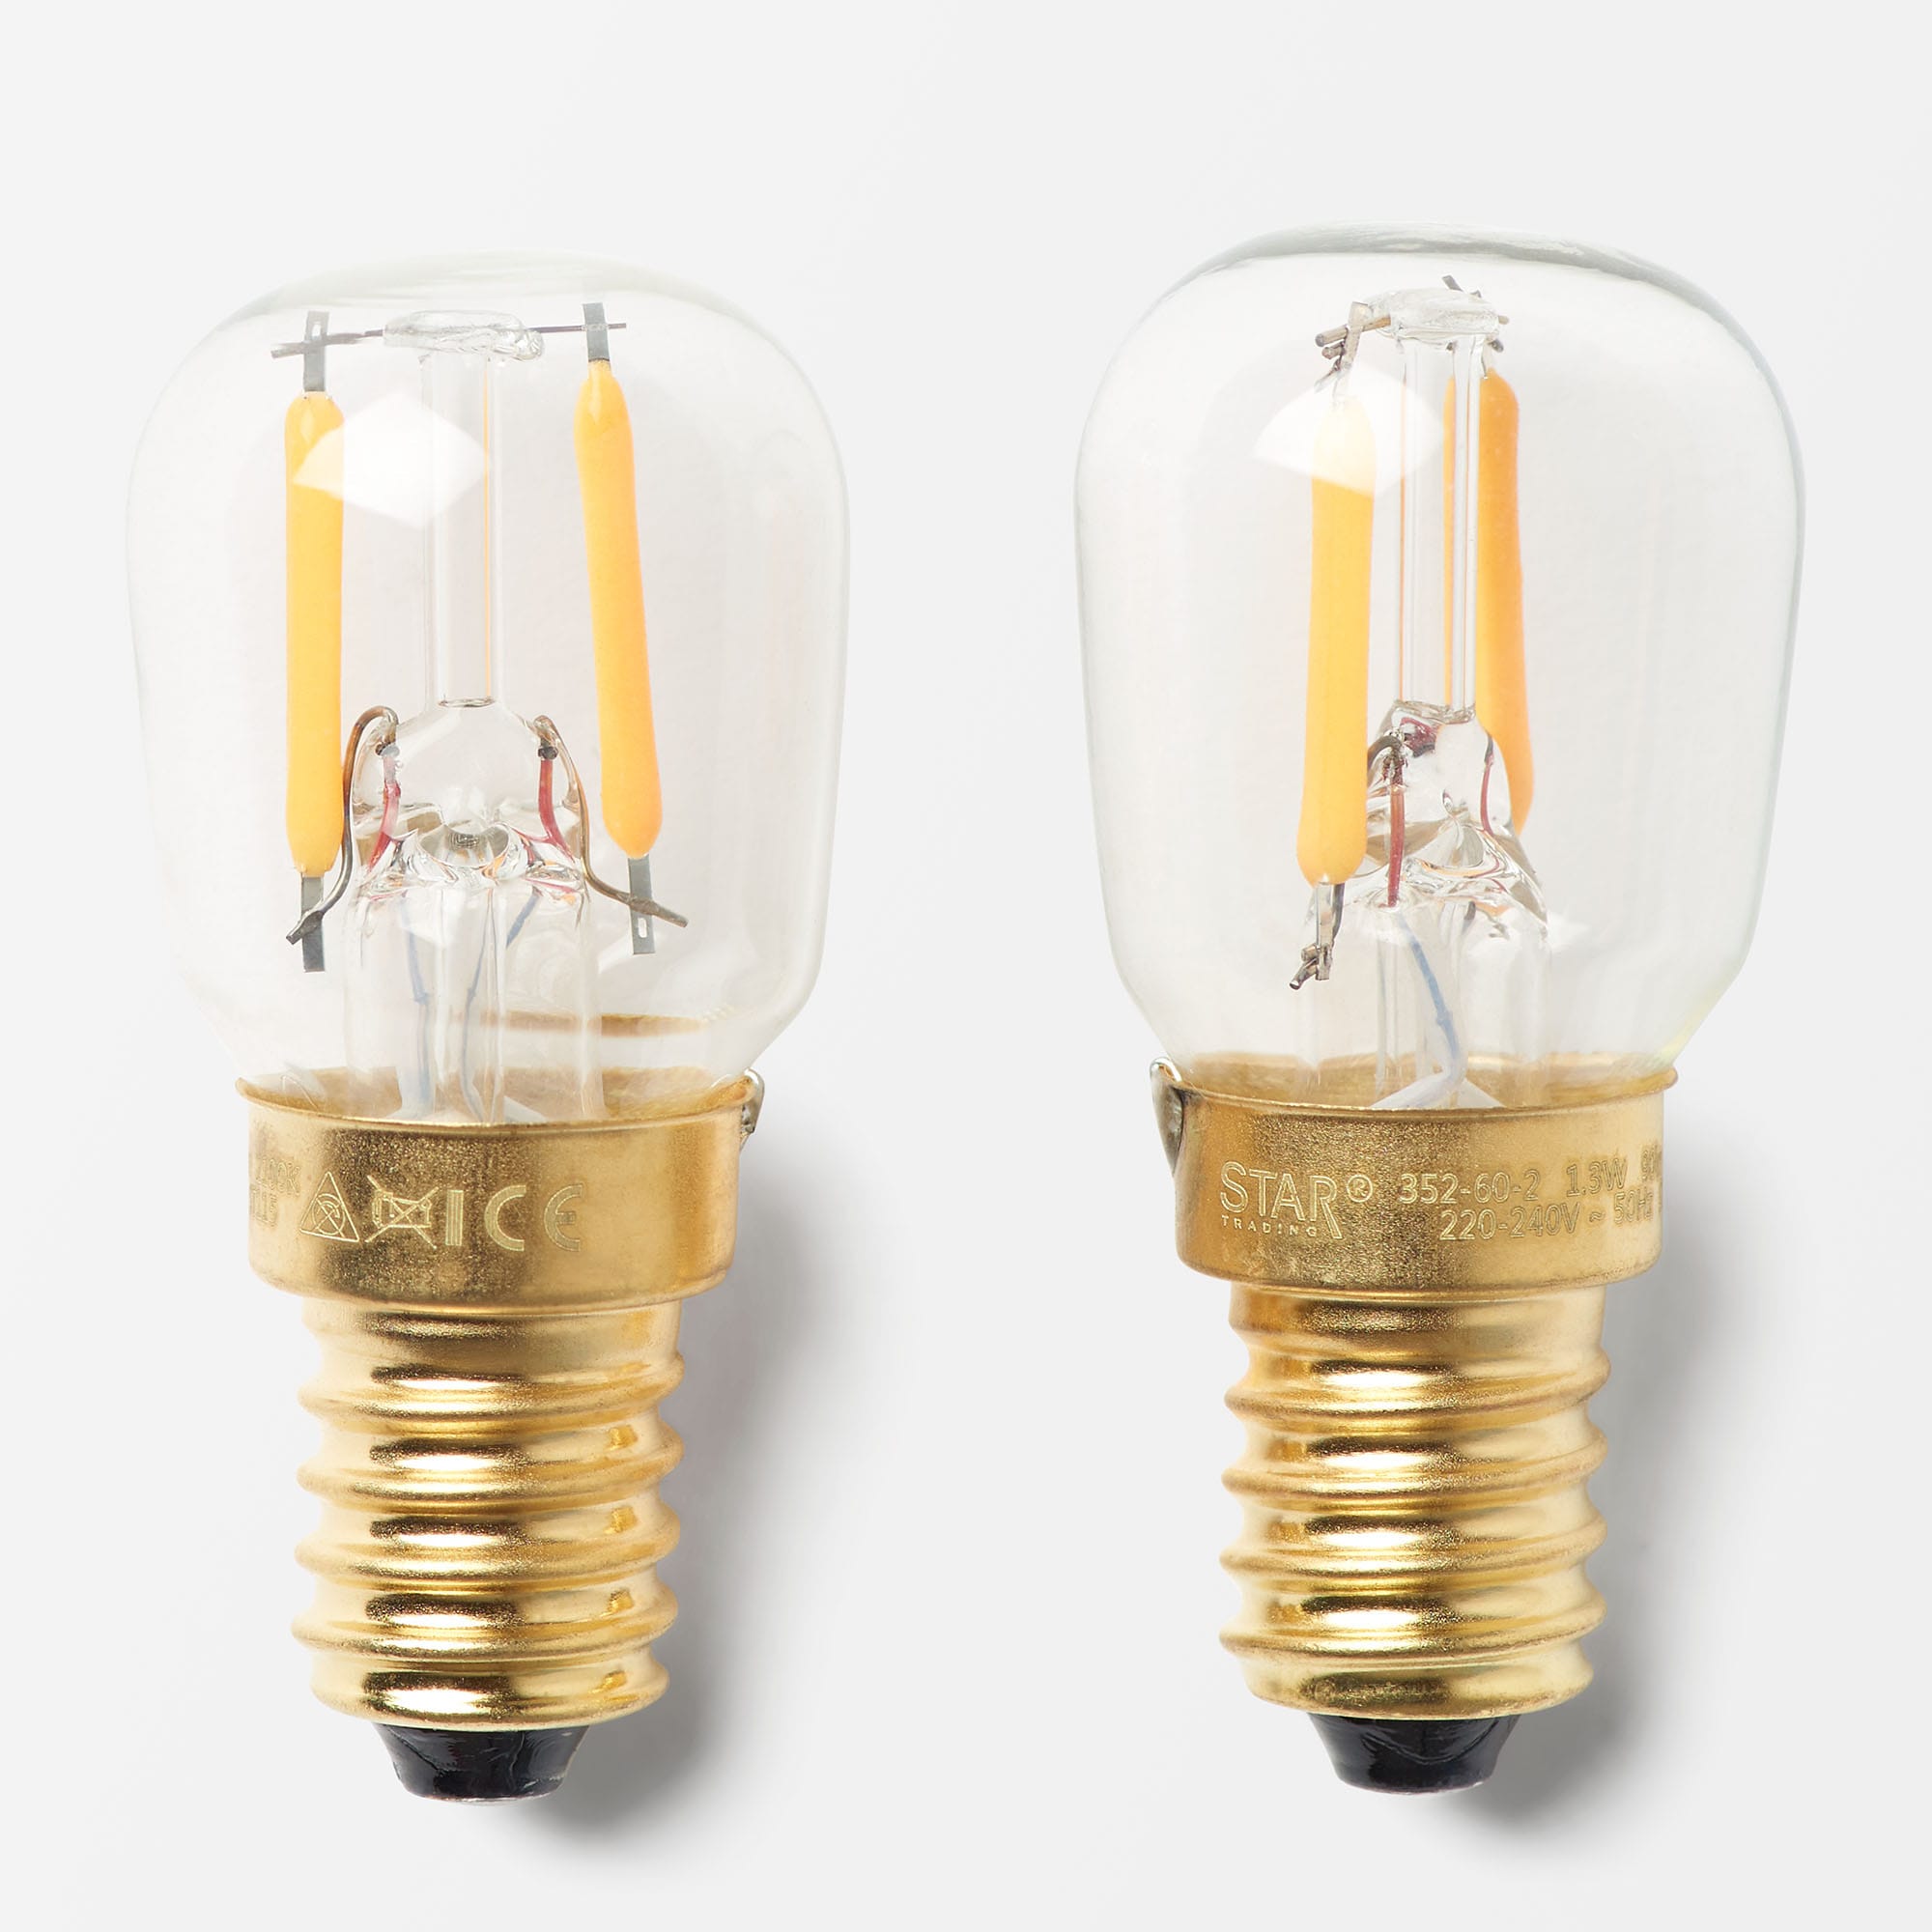 2-pack LED-lampa Soft Glow från Star trading